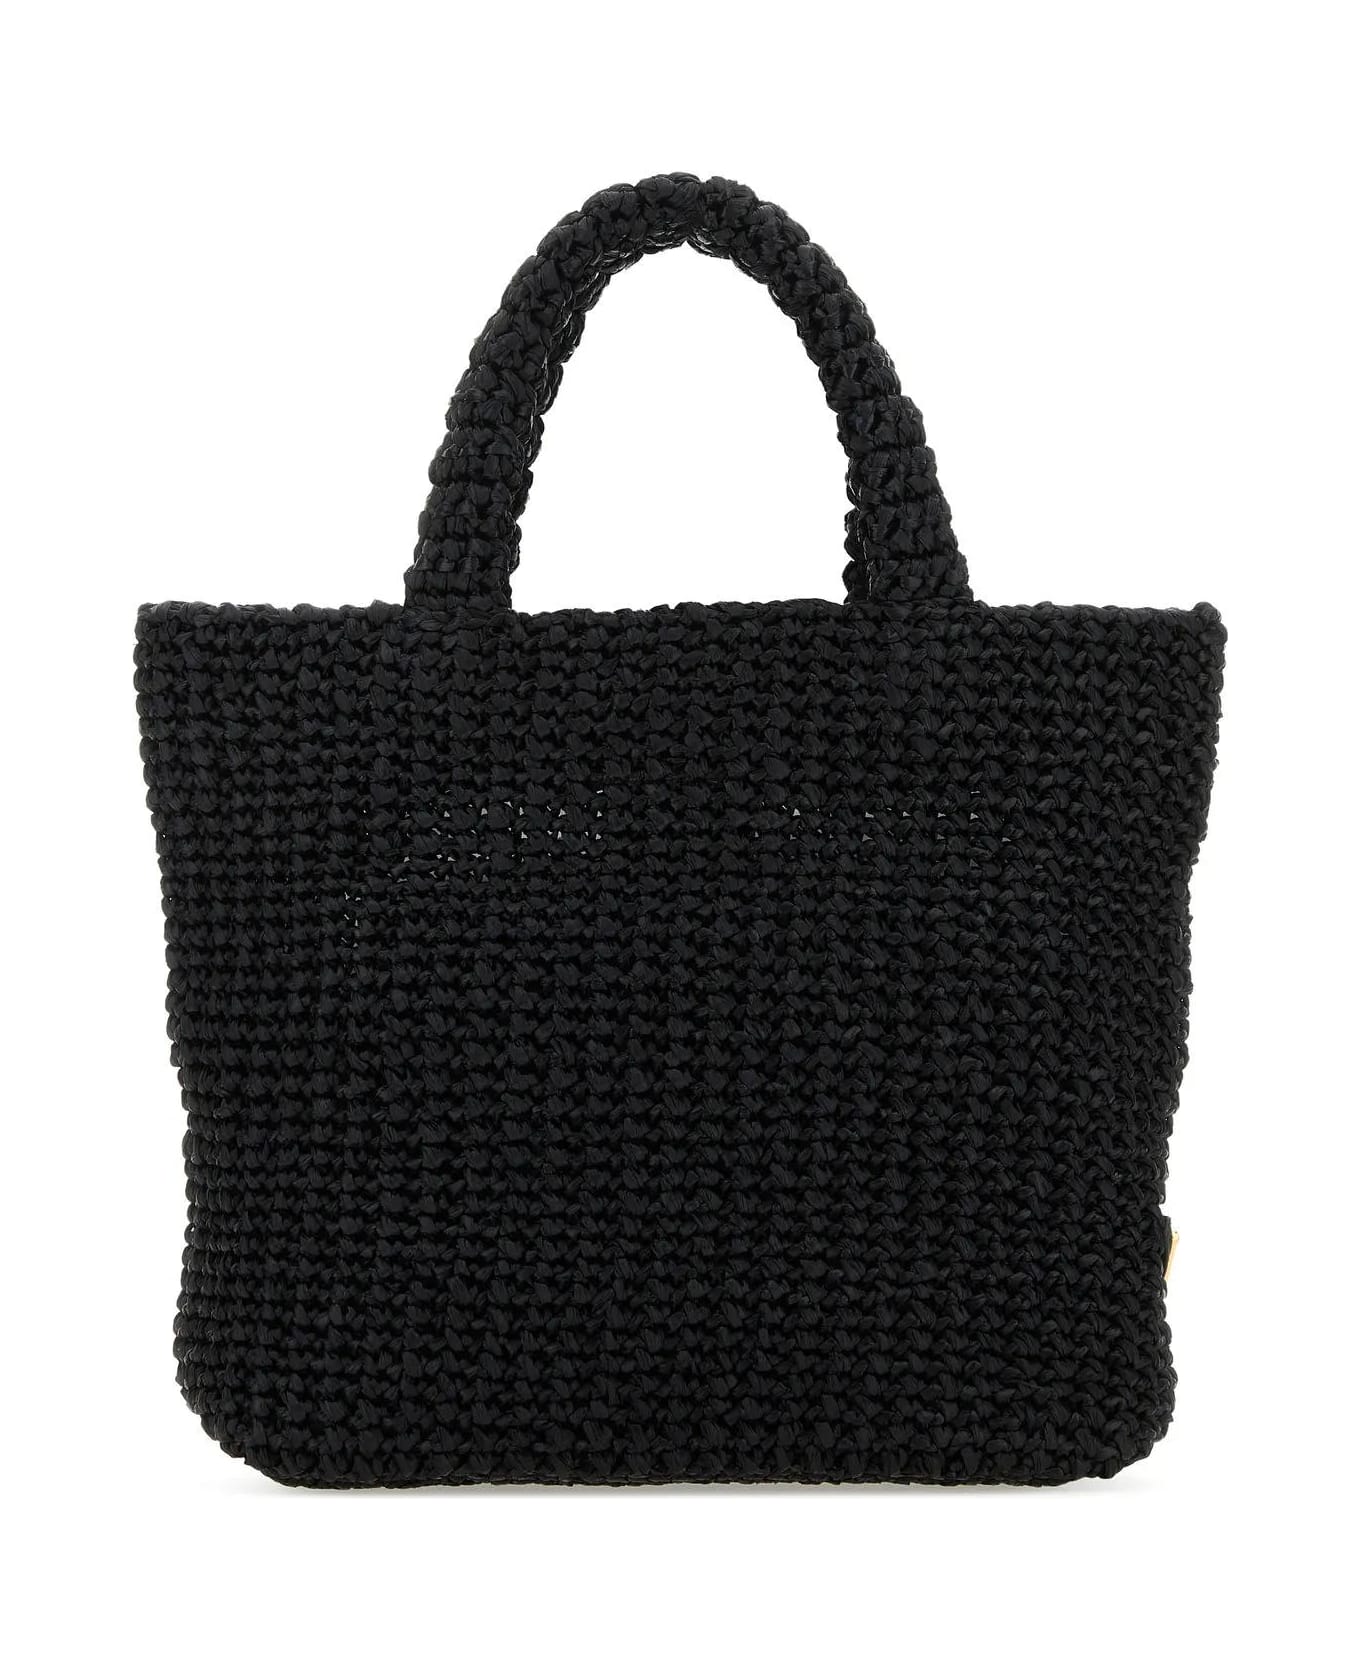 Prada Black Straw Handbag - Black